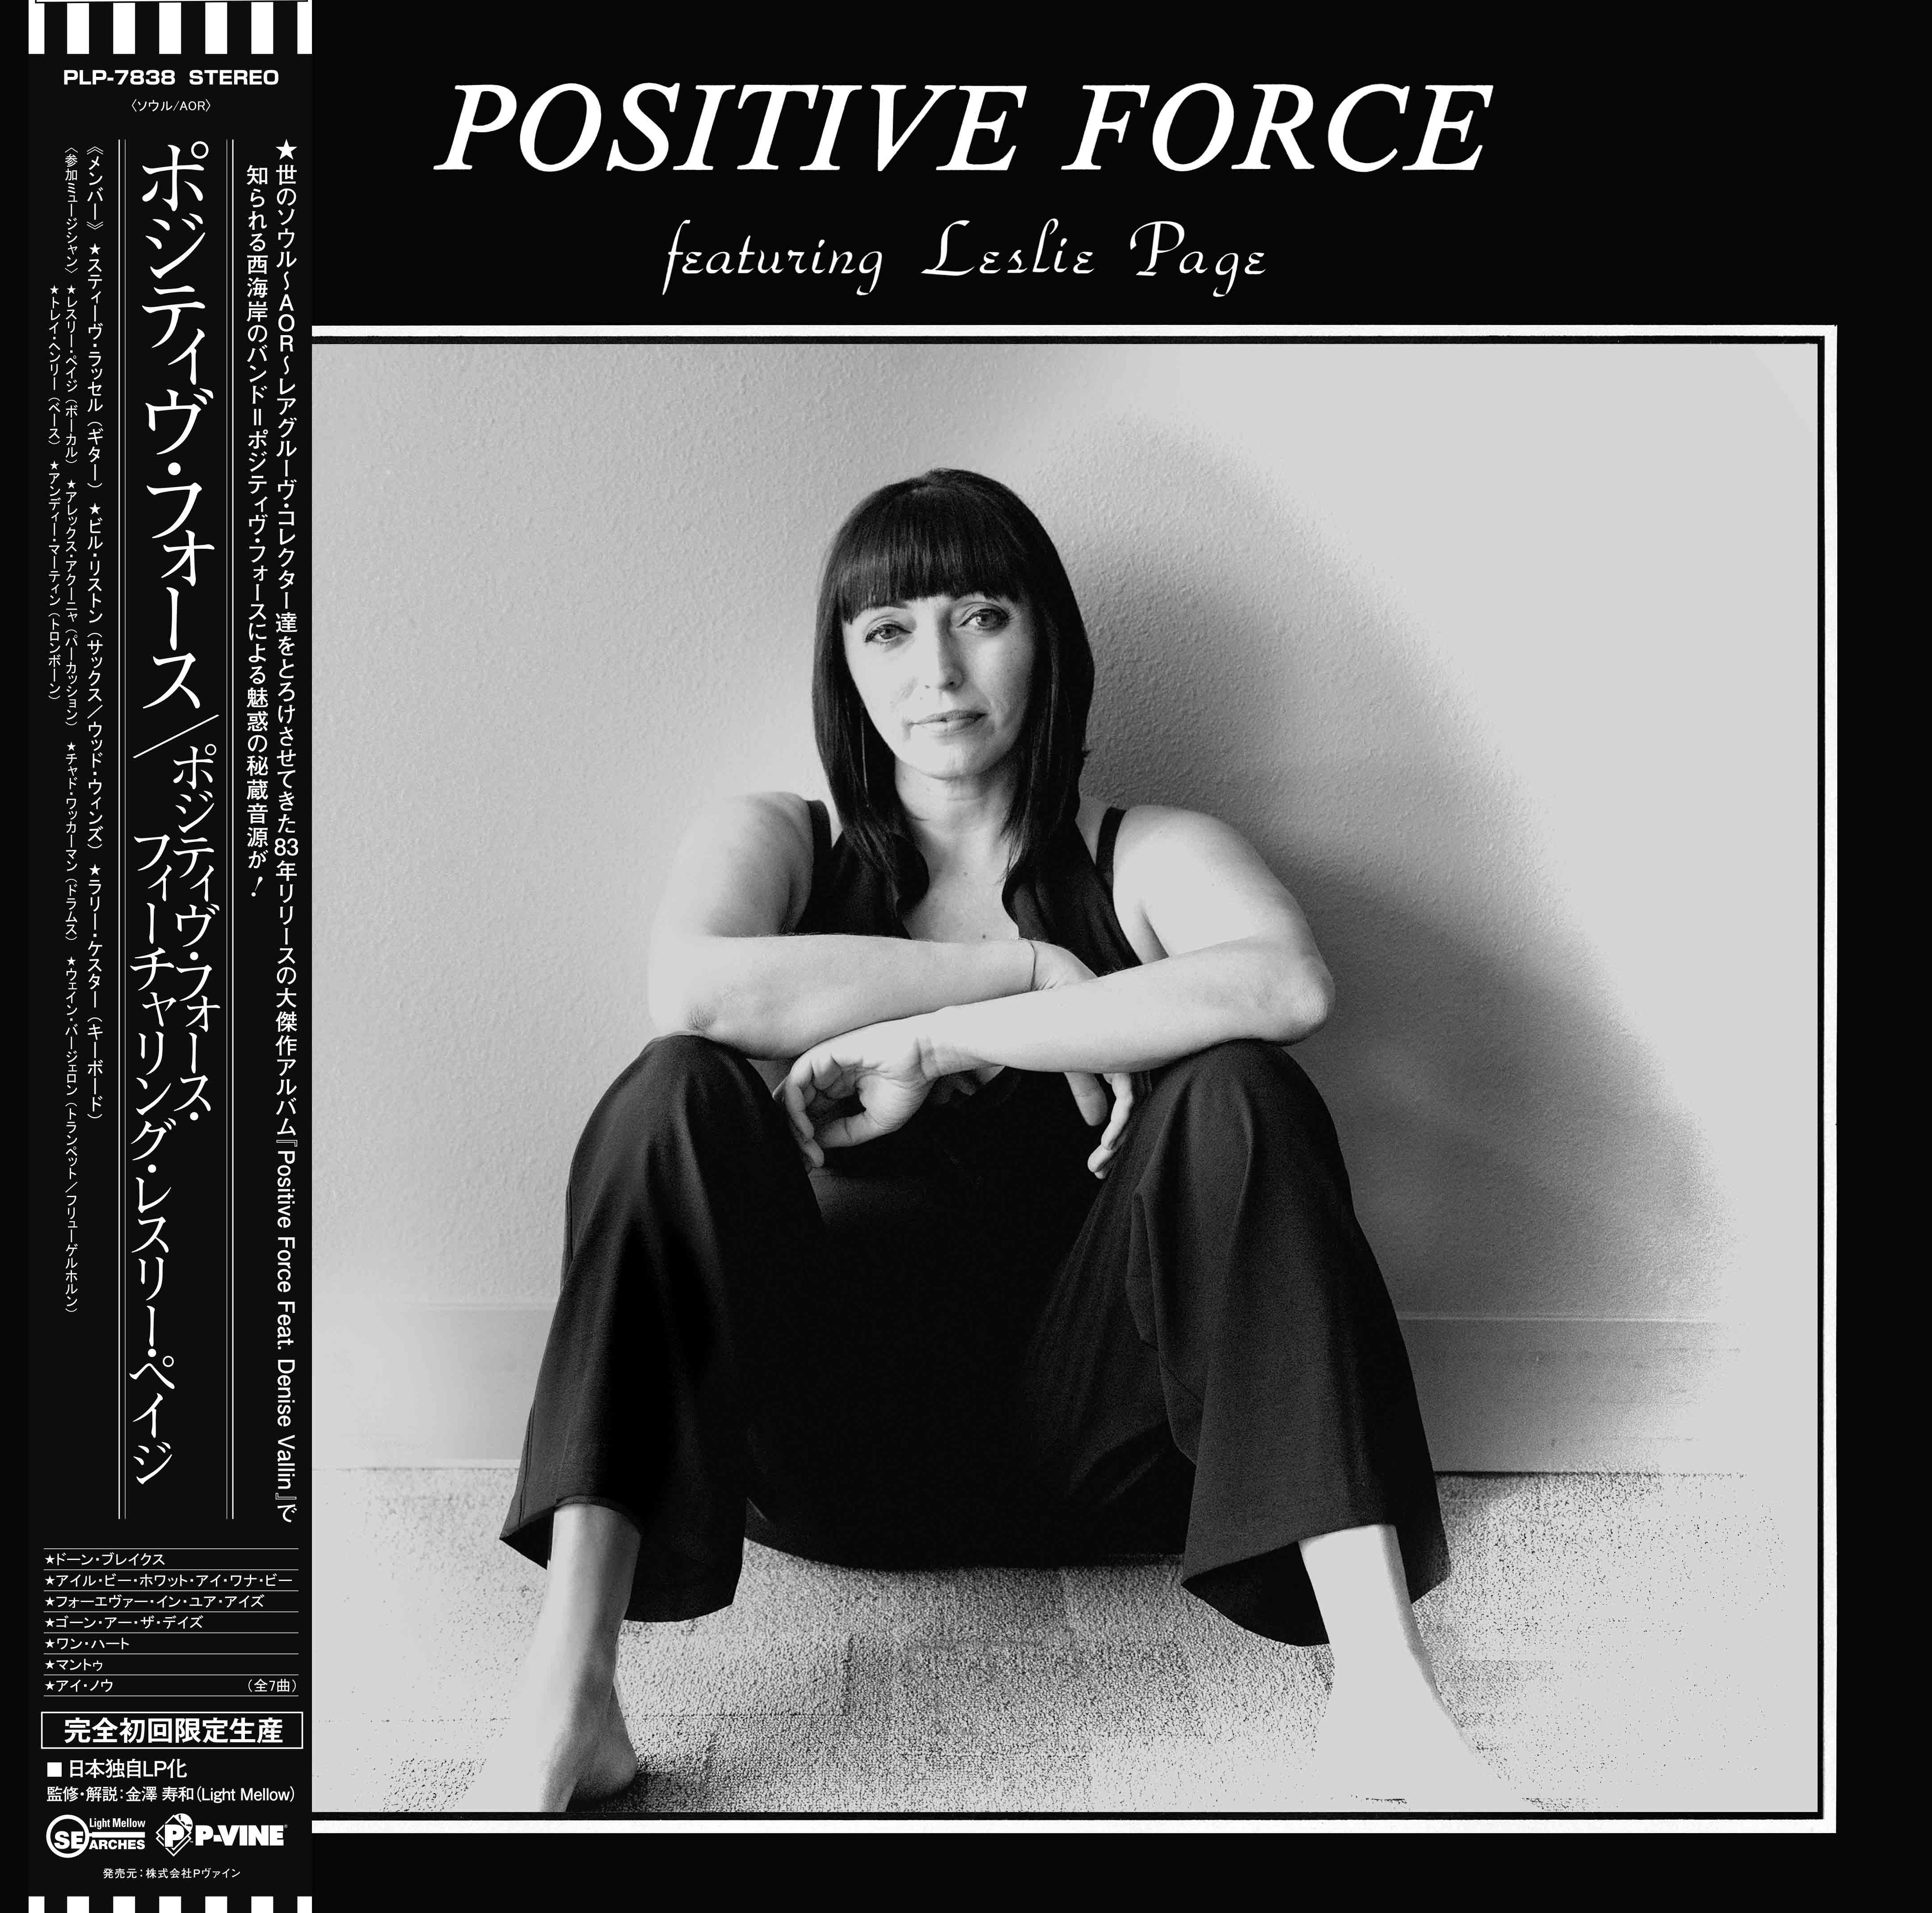 Positive Force Feat. Leslie Page